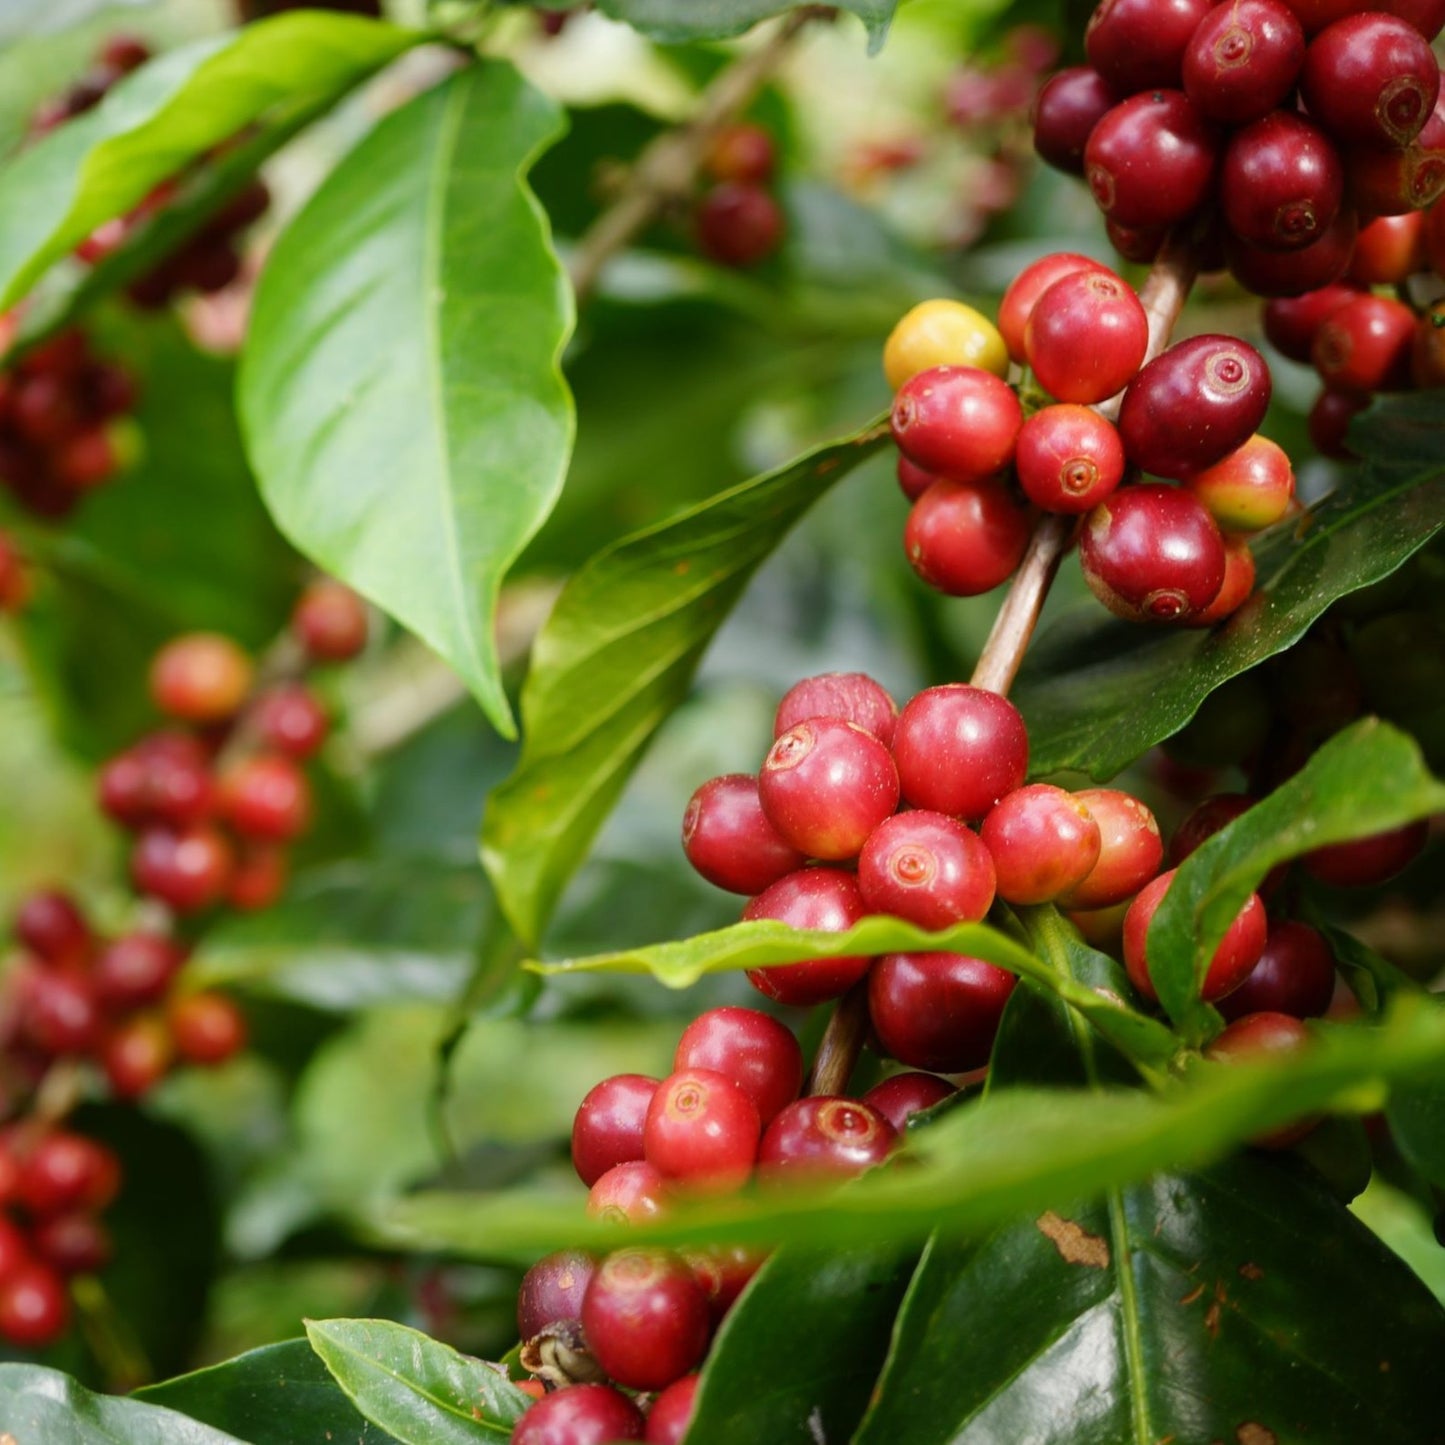 Indonesien Lintong - Ristede kaffebønner